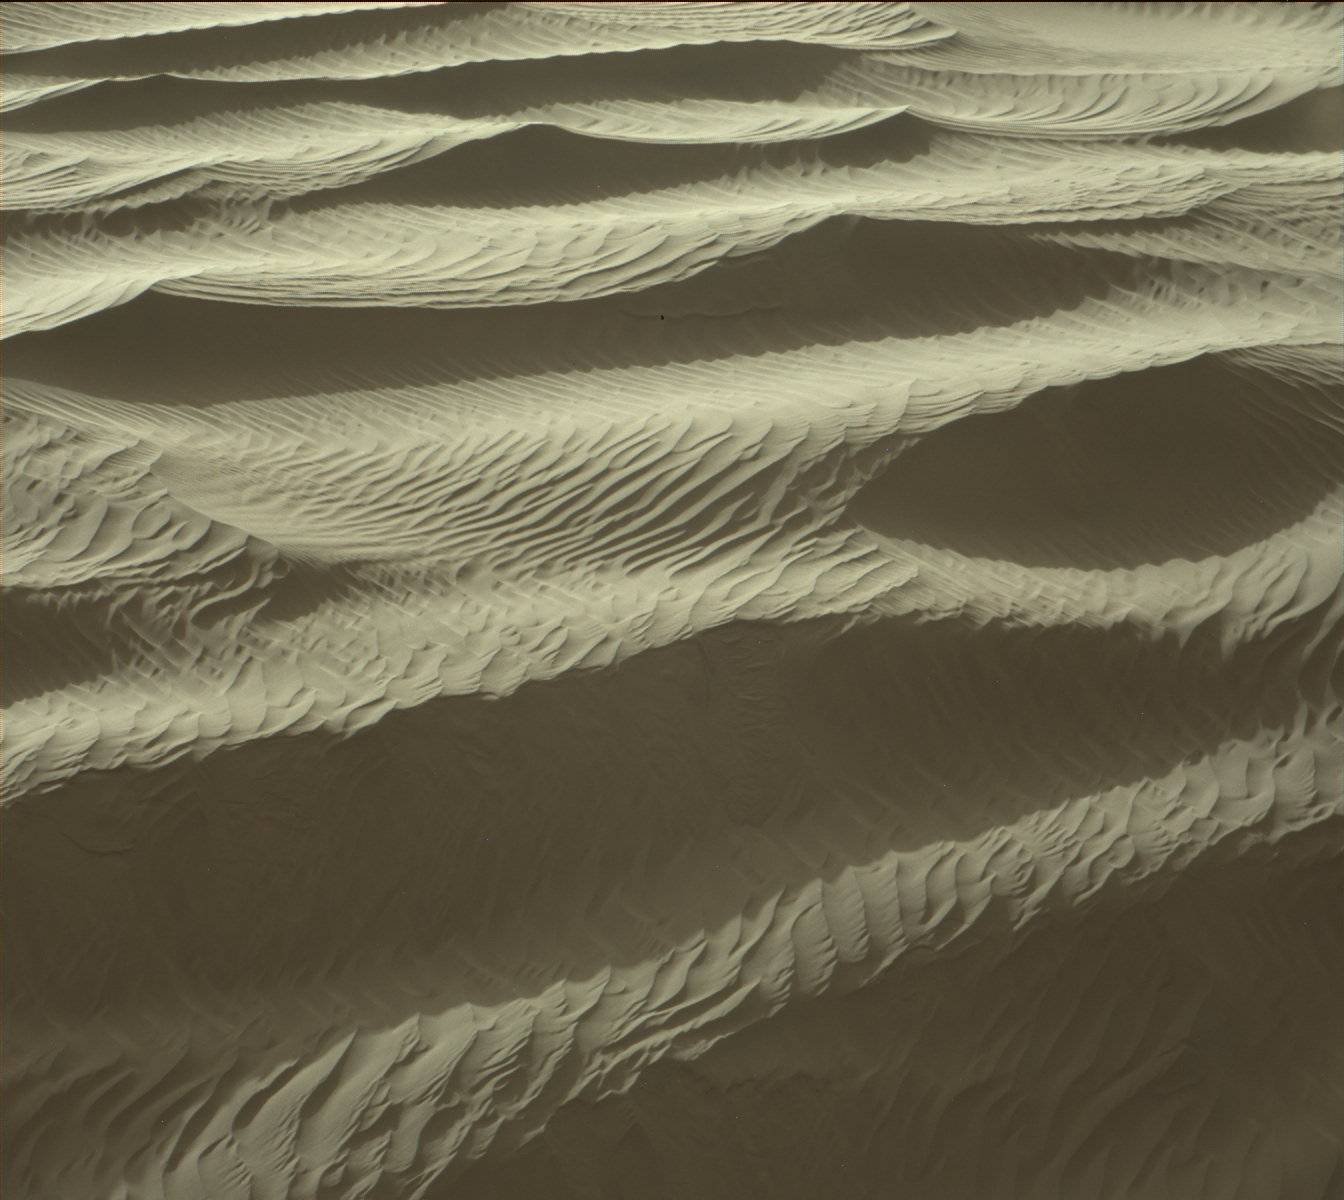 Mastcam view of sand ripples on High Dune. Image Credit: NASA/JPL-Caltech